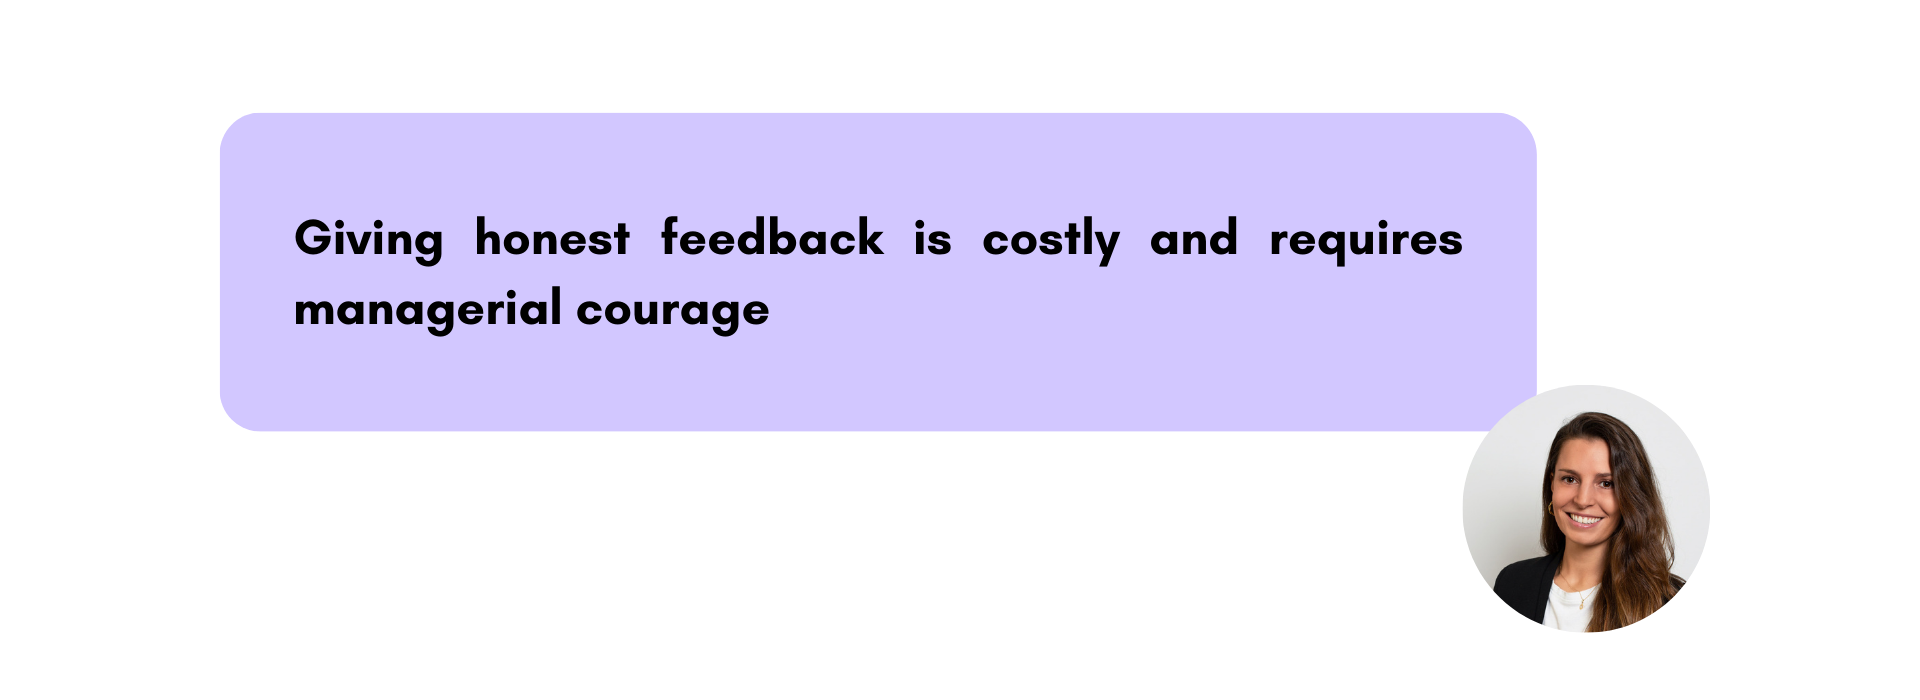 feedback quote illustration